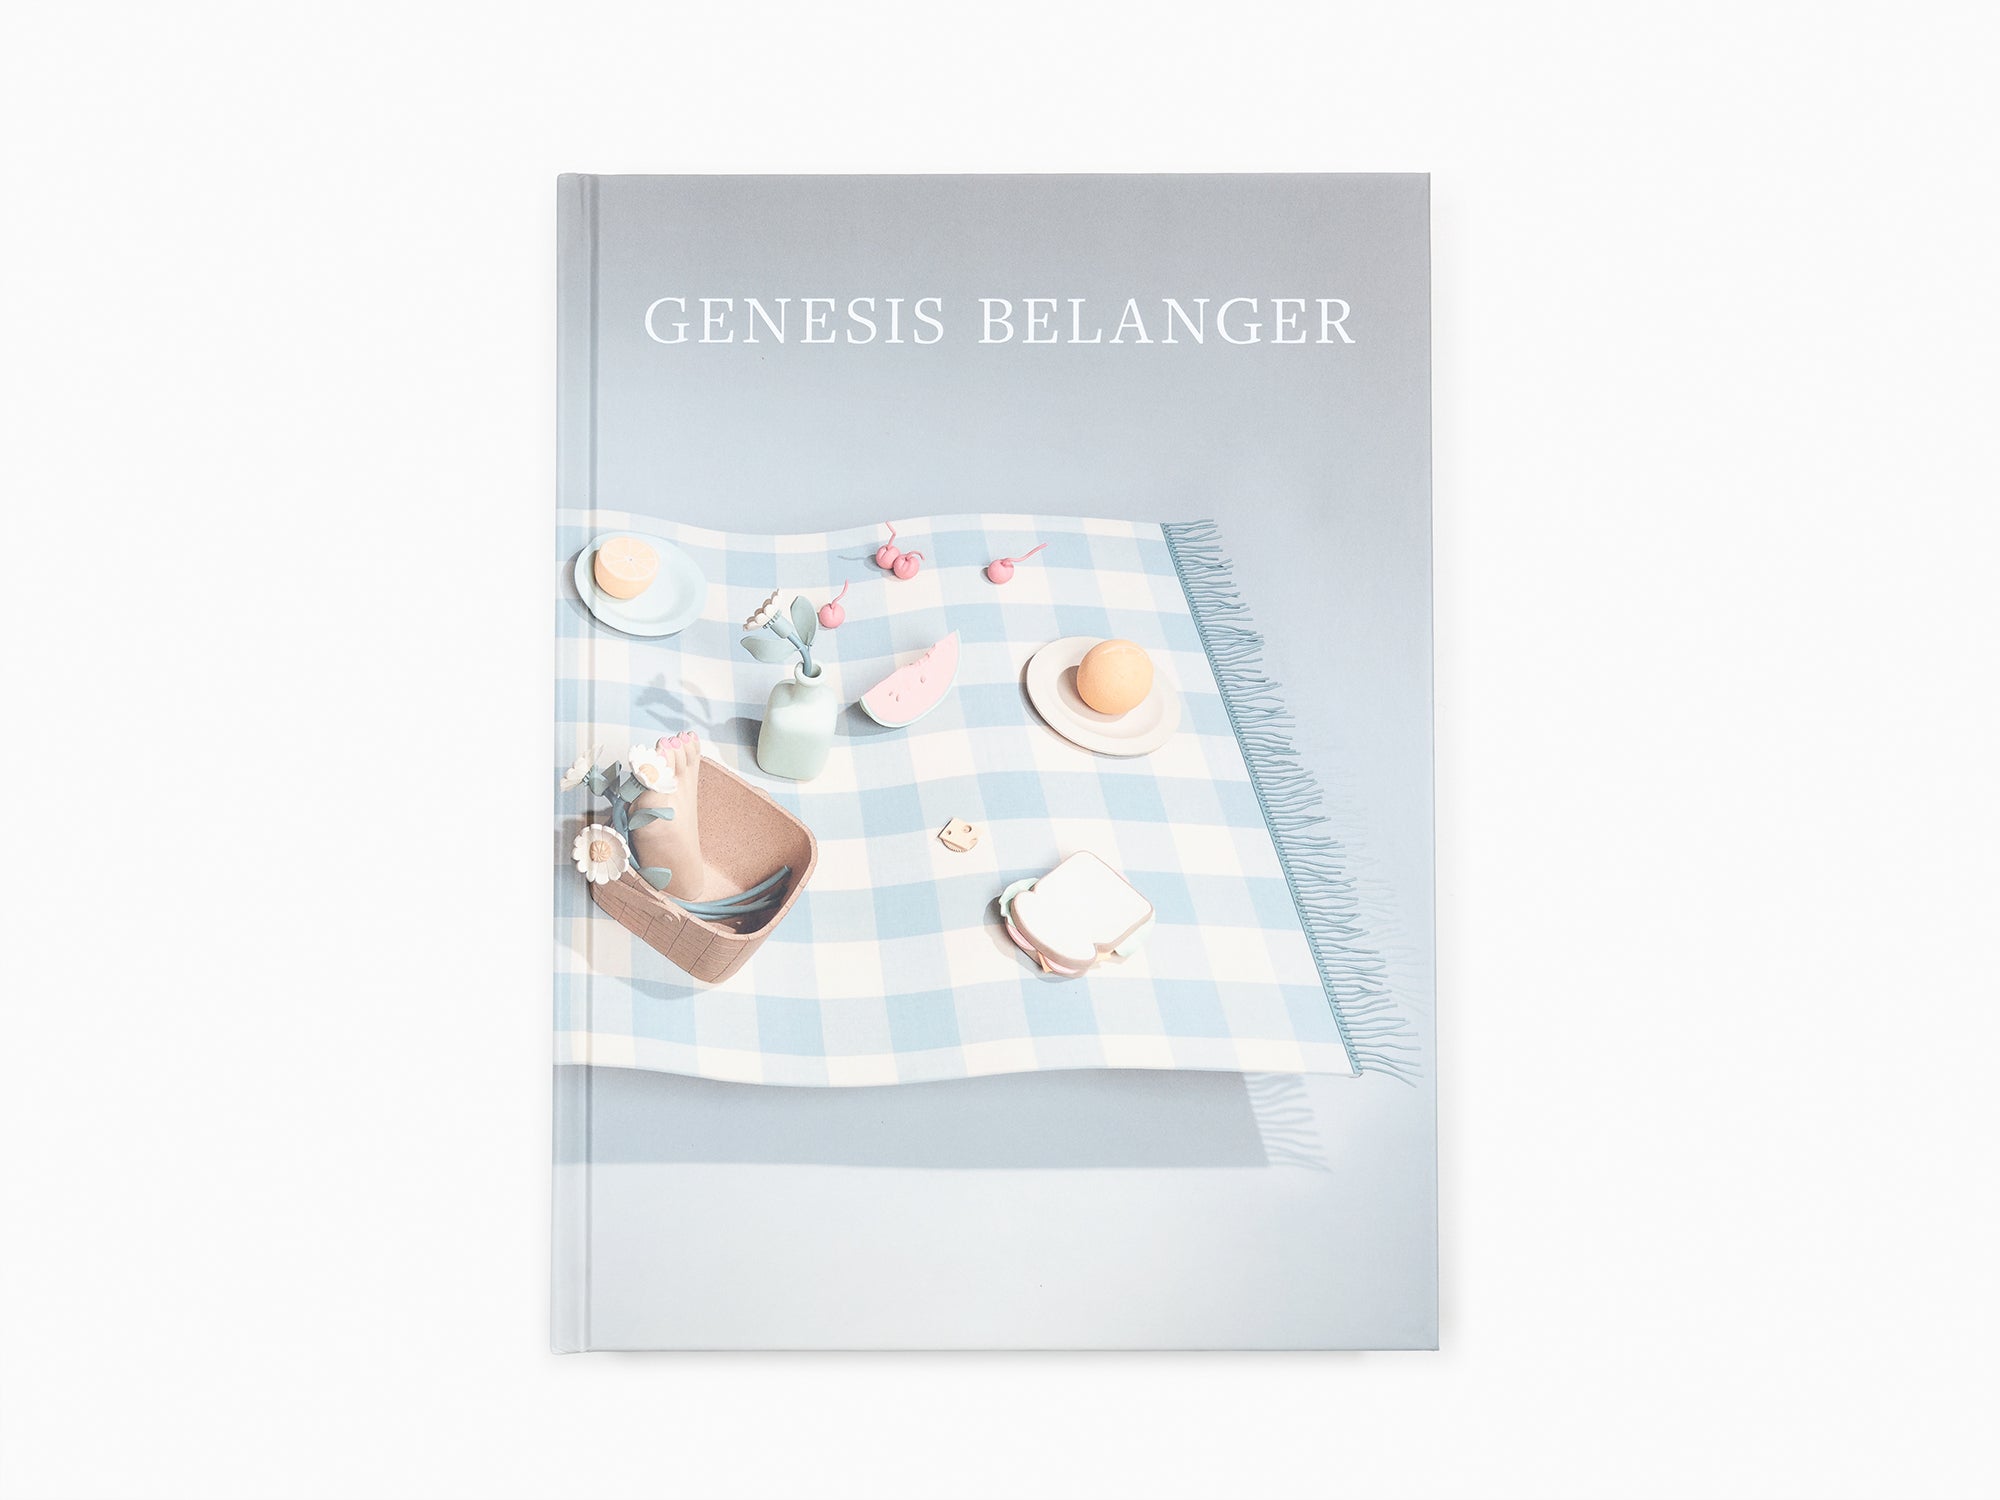 Genesis Belanger - Genesis Belanger (Perrotin monographie )